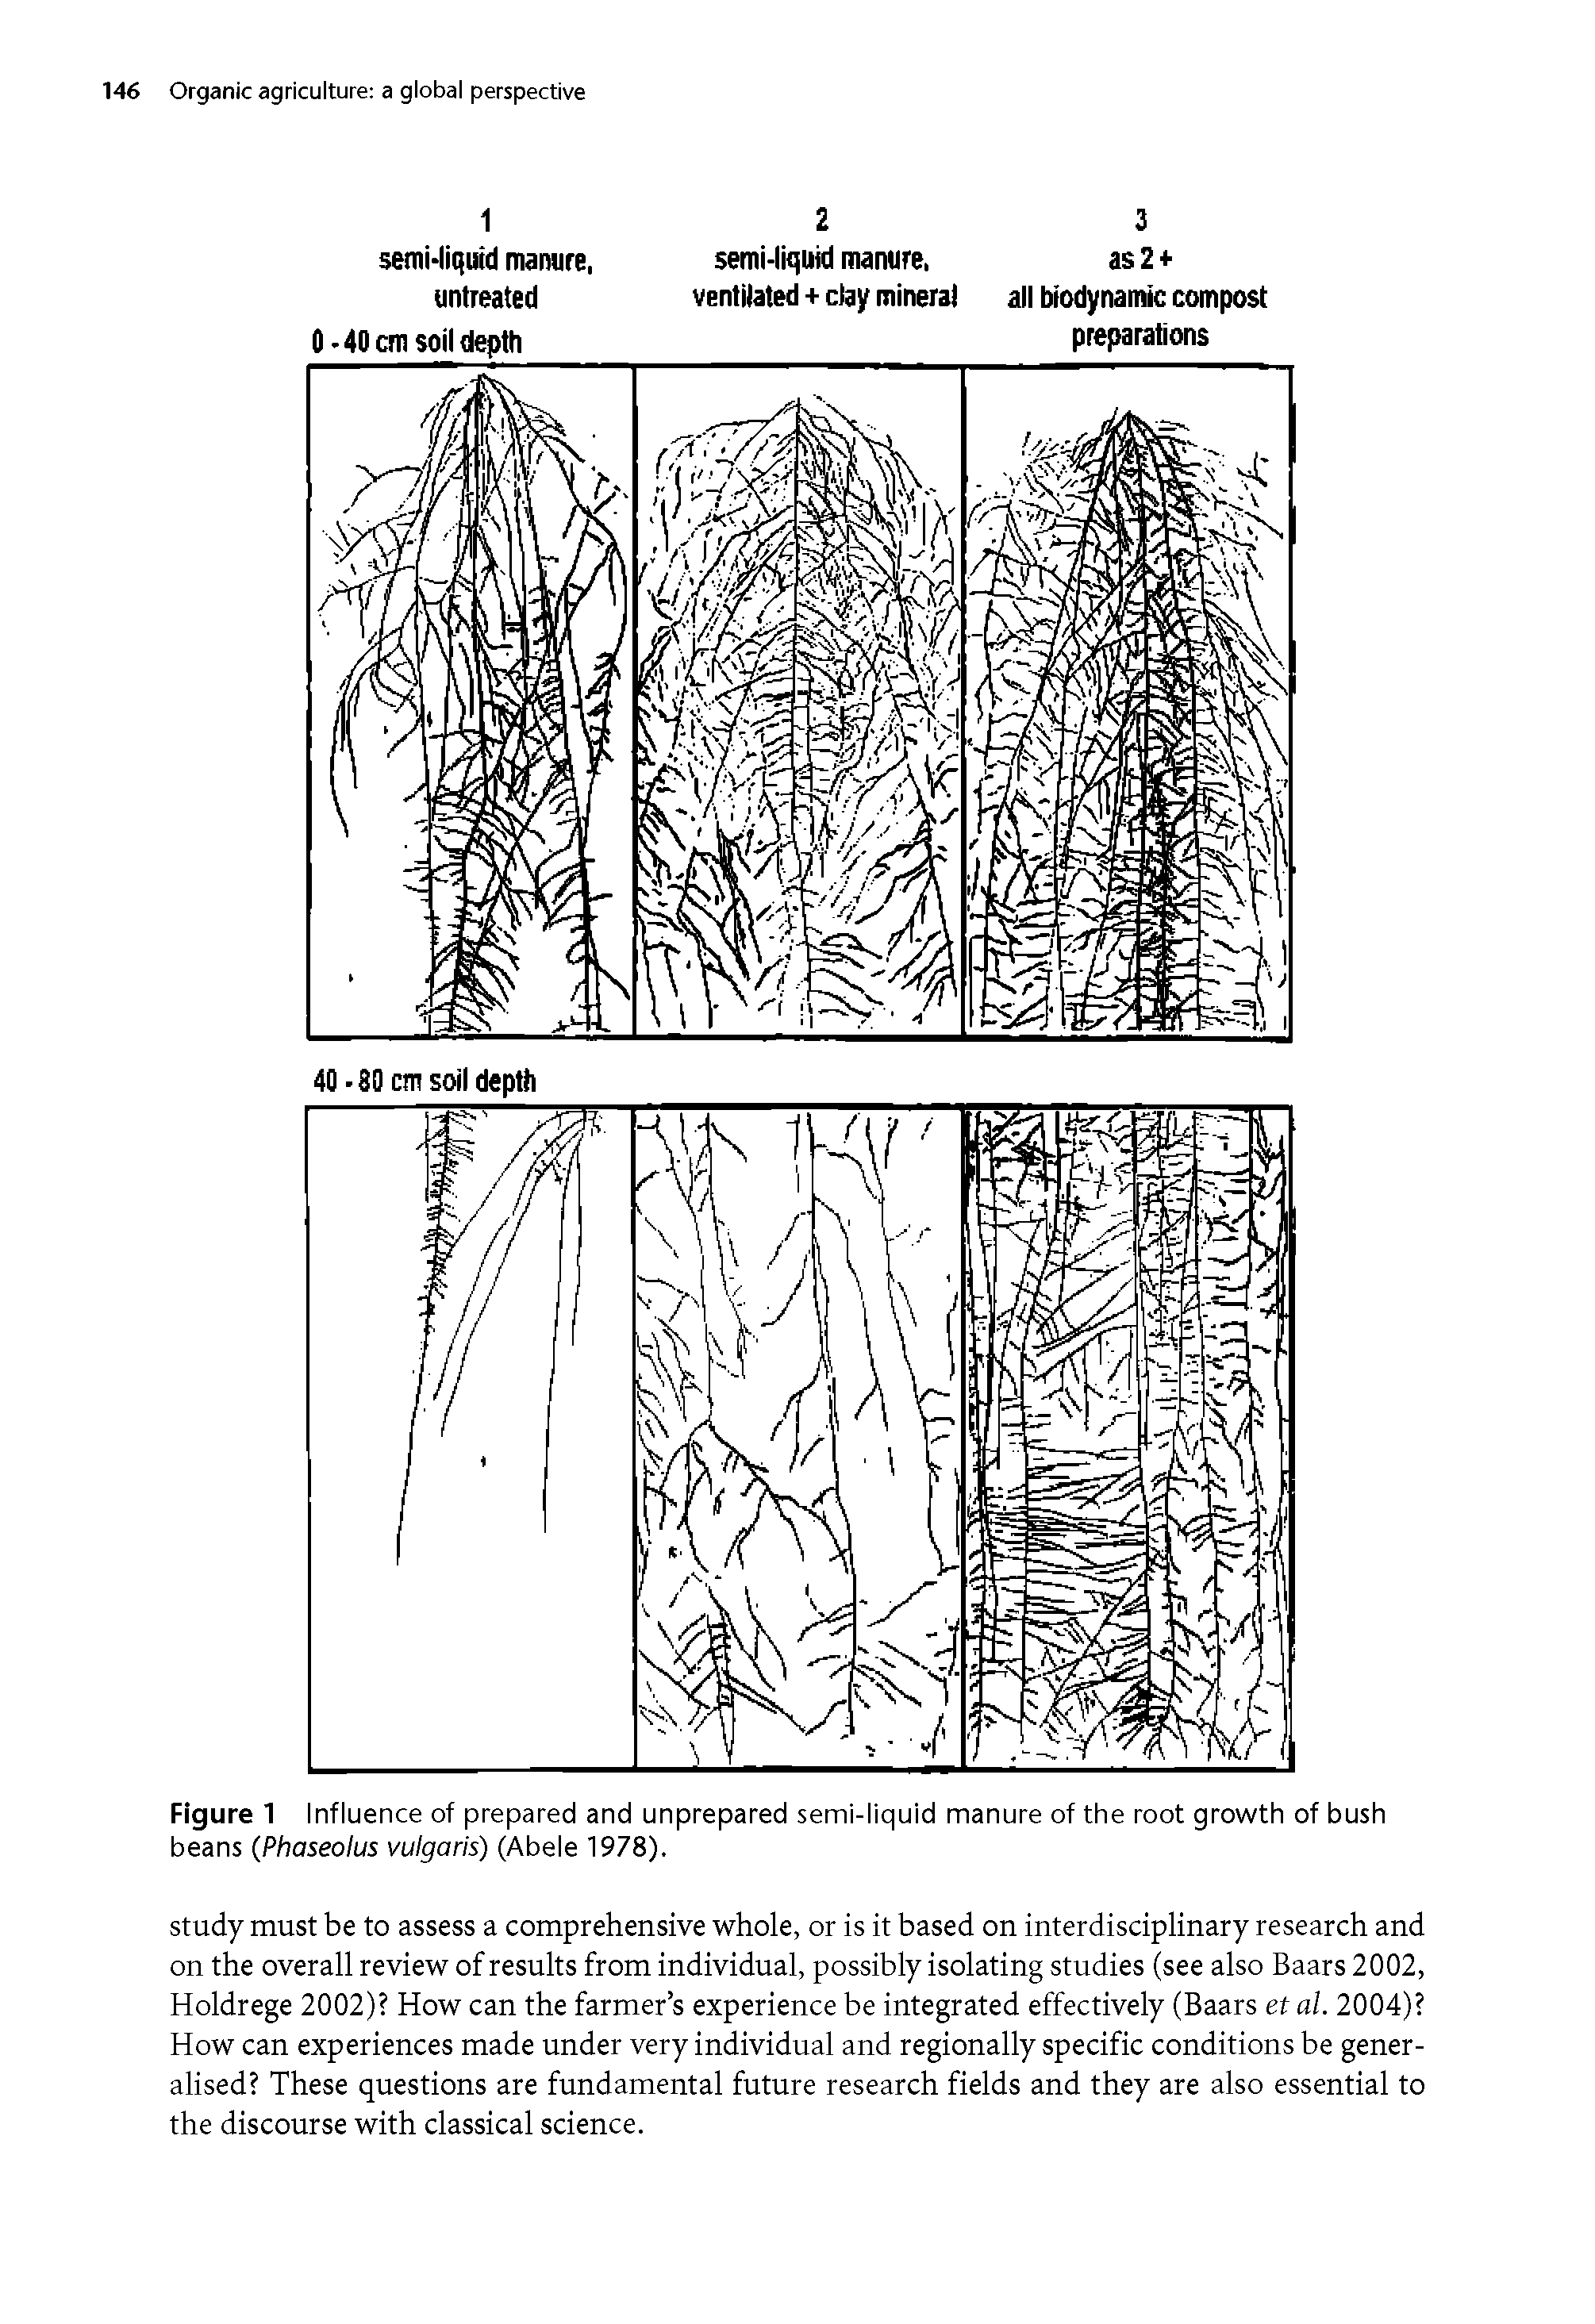 Figure 1 Influence of prepared and unprepared semi-liquid manure of the root growth of bush beans (Phaseolus vulgaris) (Abele 1978).